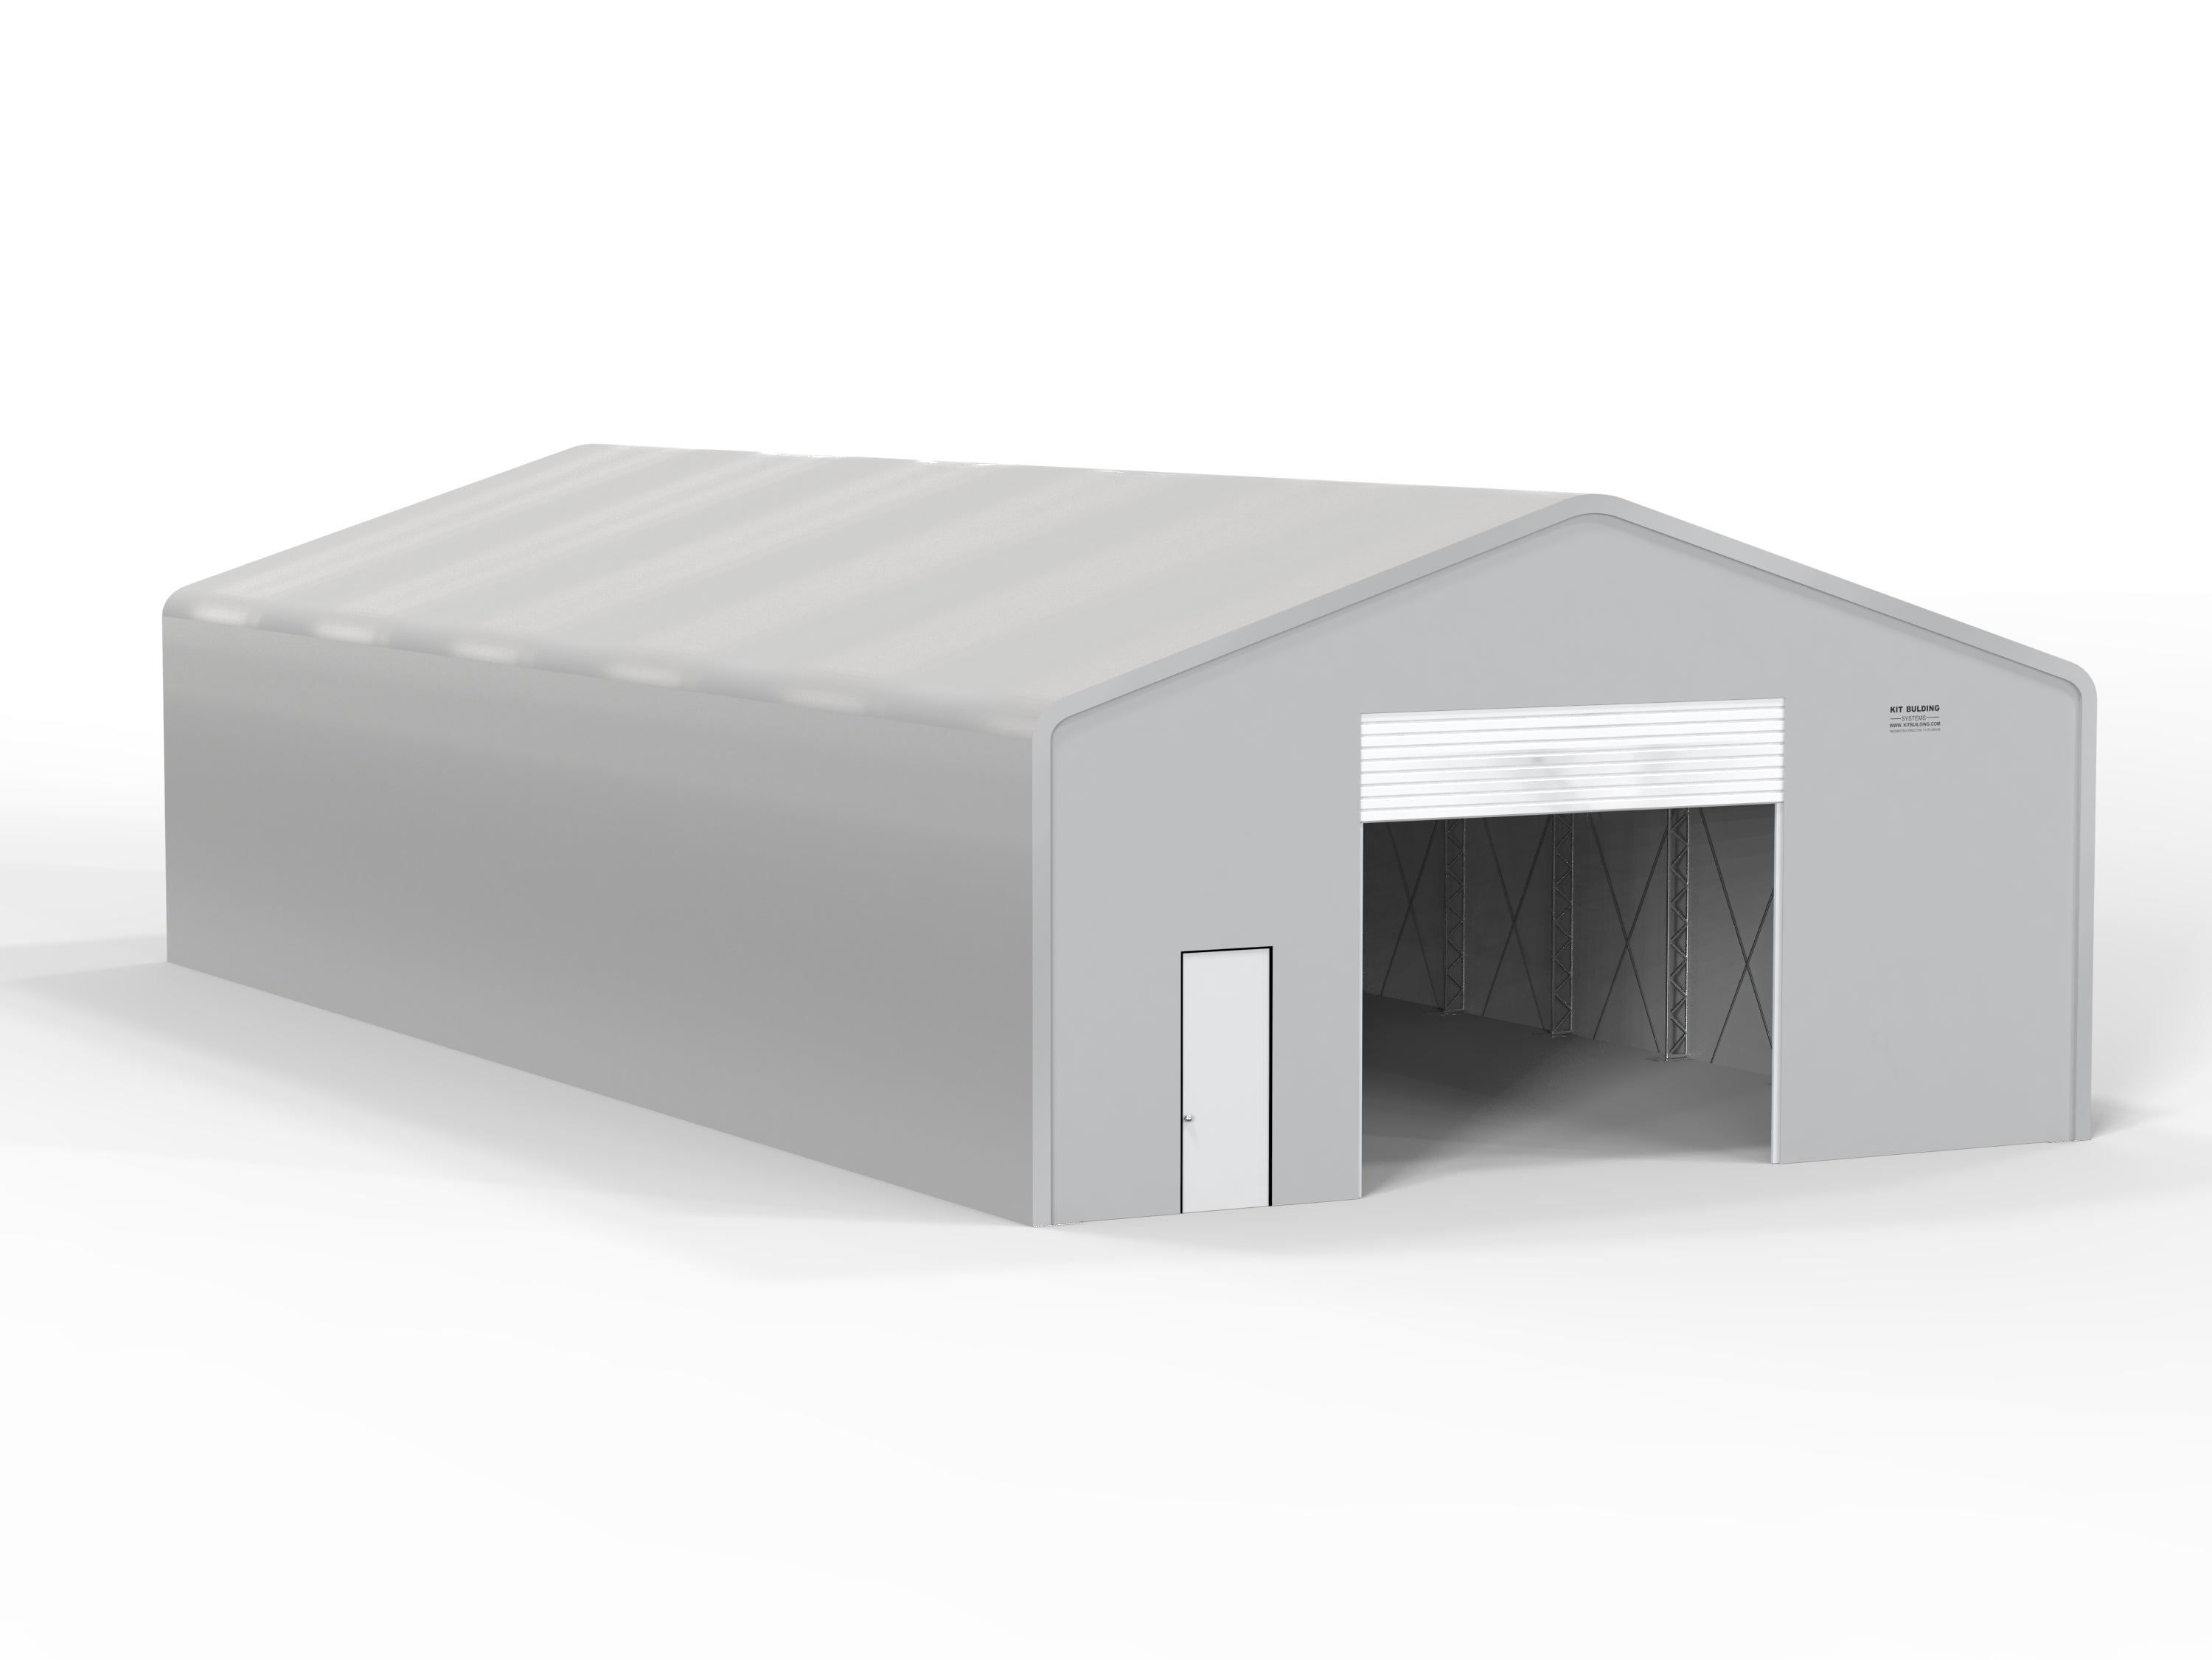 Double Truss PVC temporary storage building - Grey - Automaticshutter